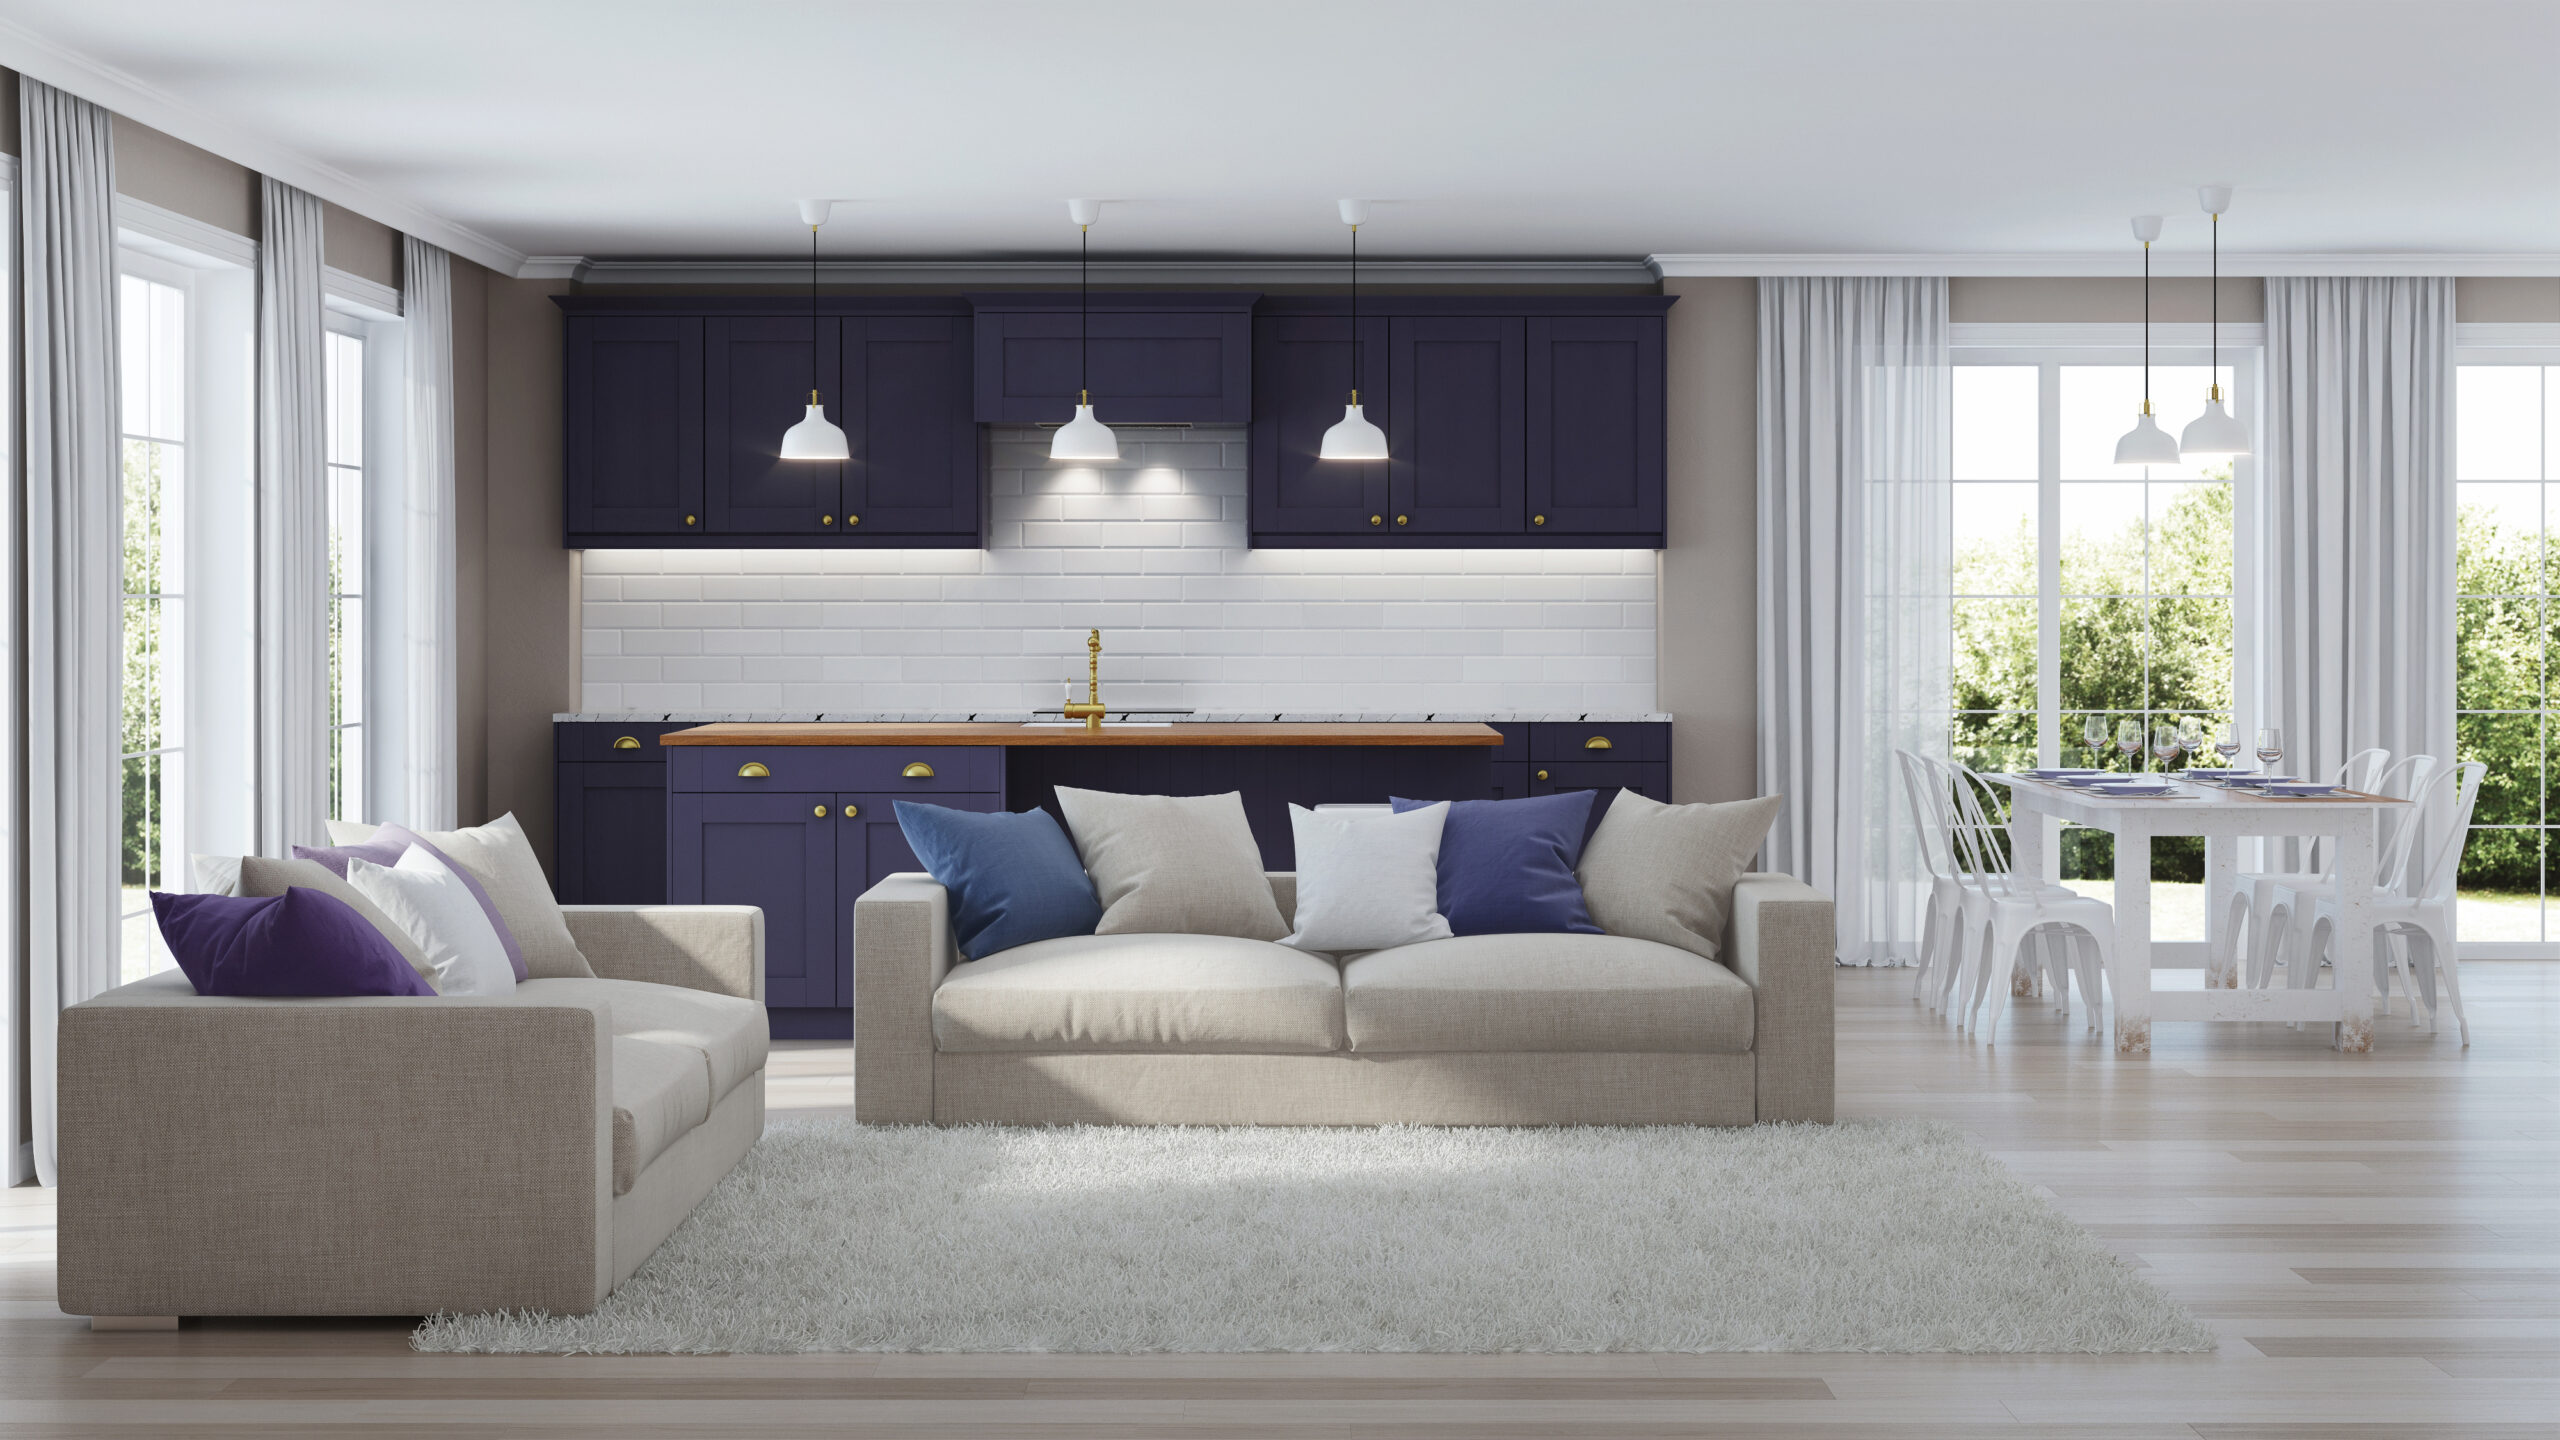 Mondern interior of a home, white sofa with purple kitchen